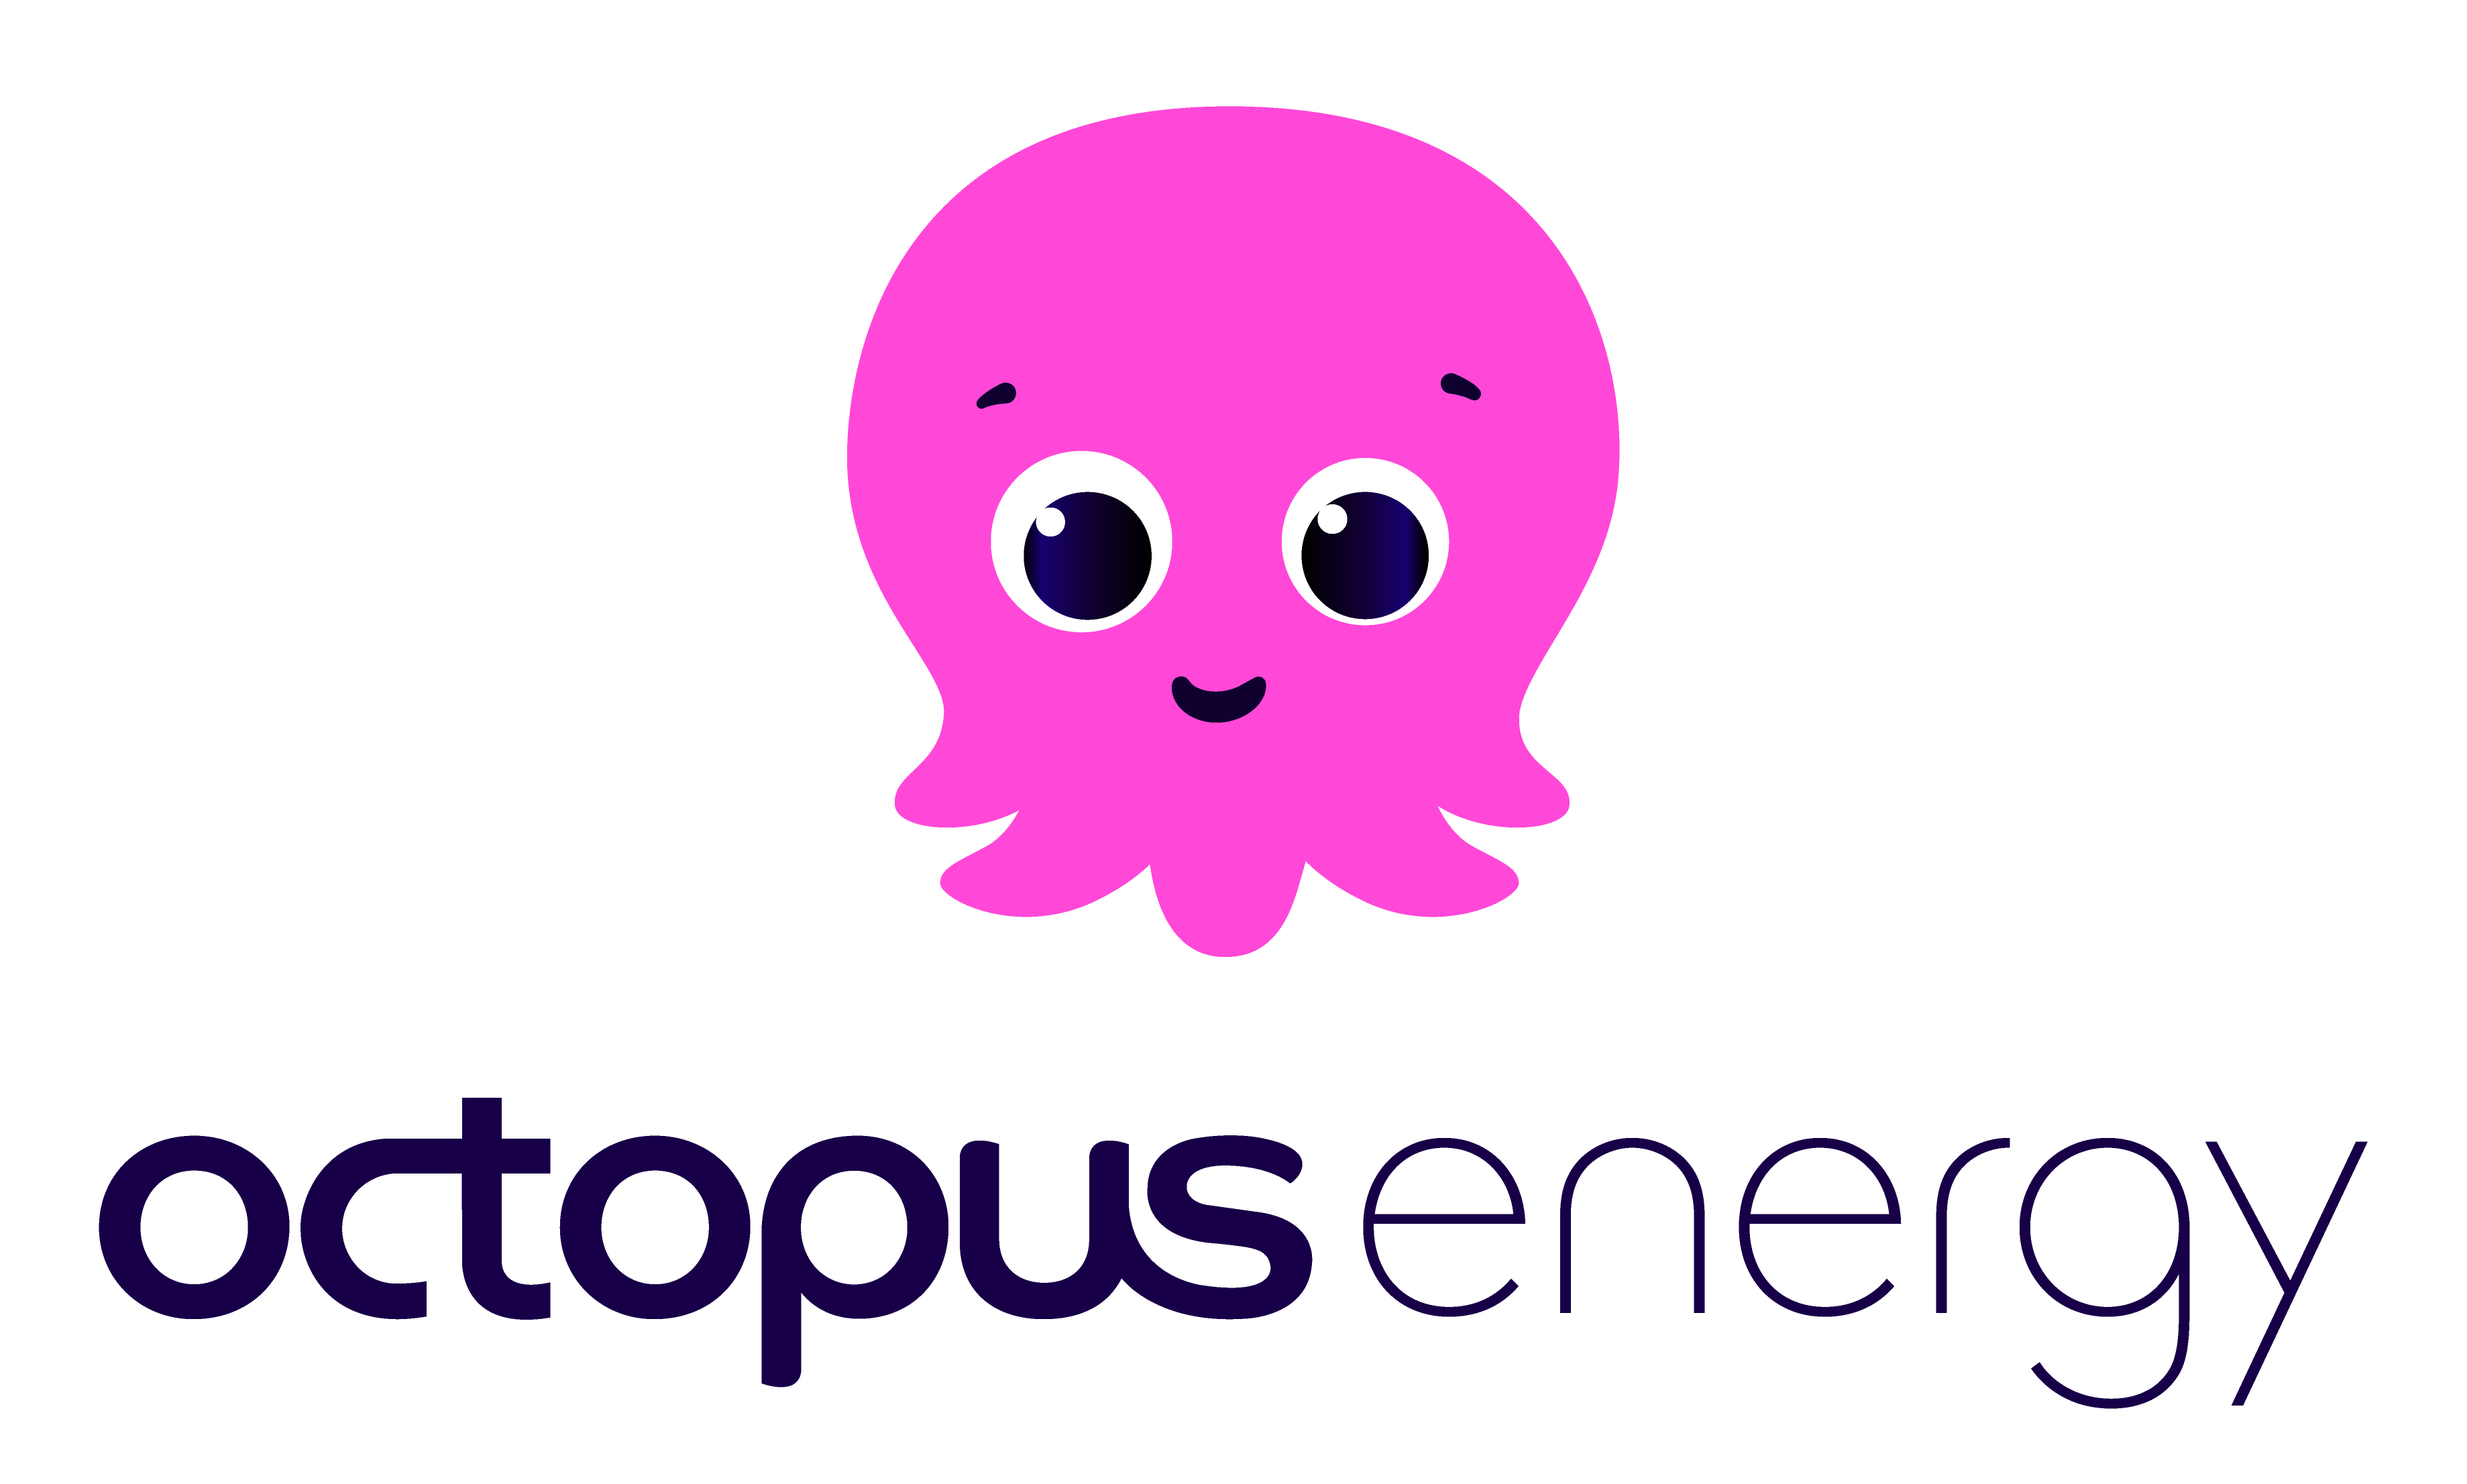 Octopus Energy Germany GmbH